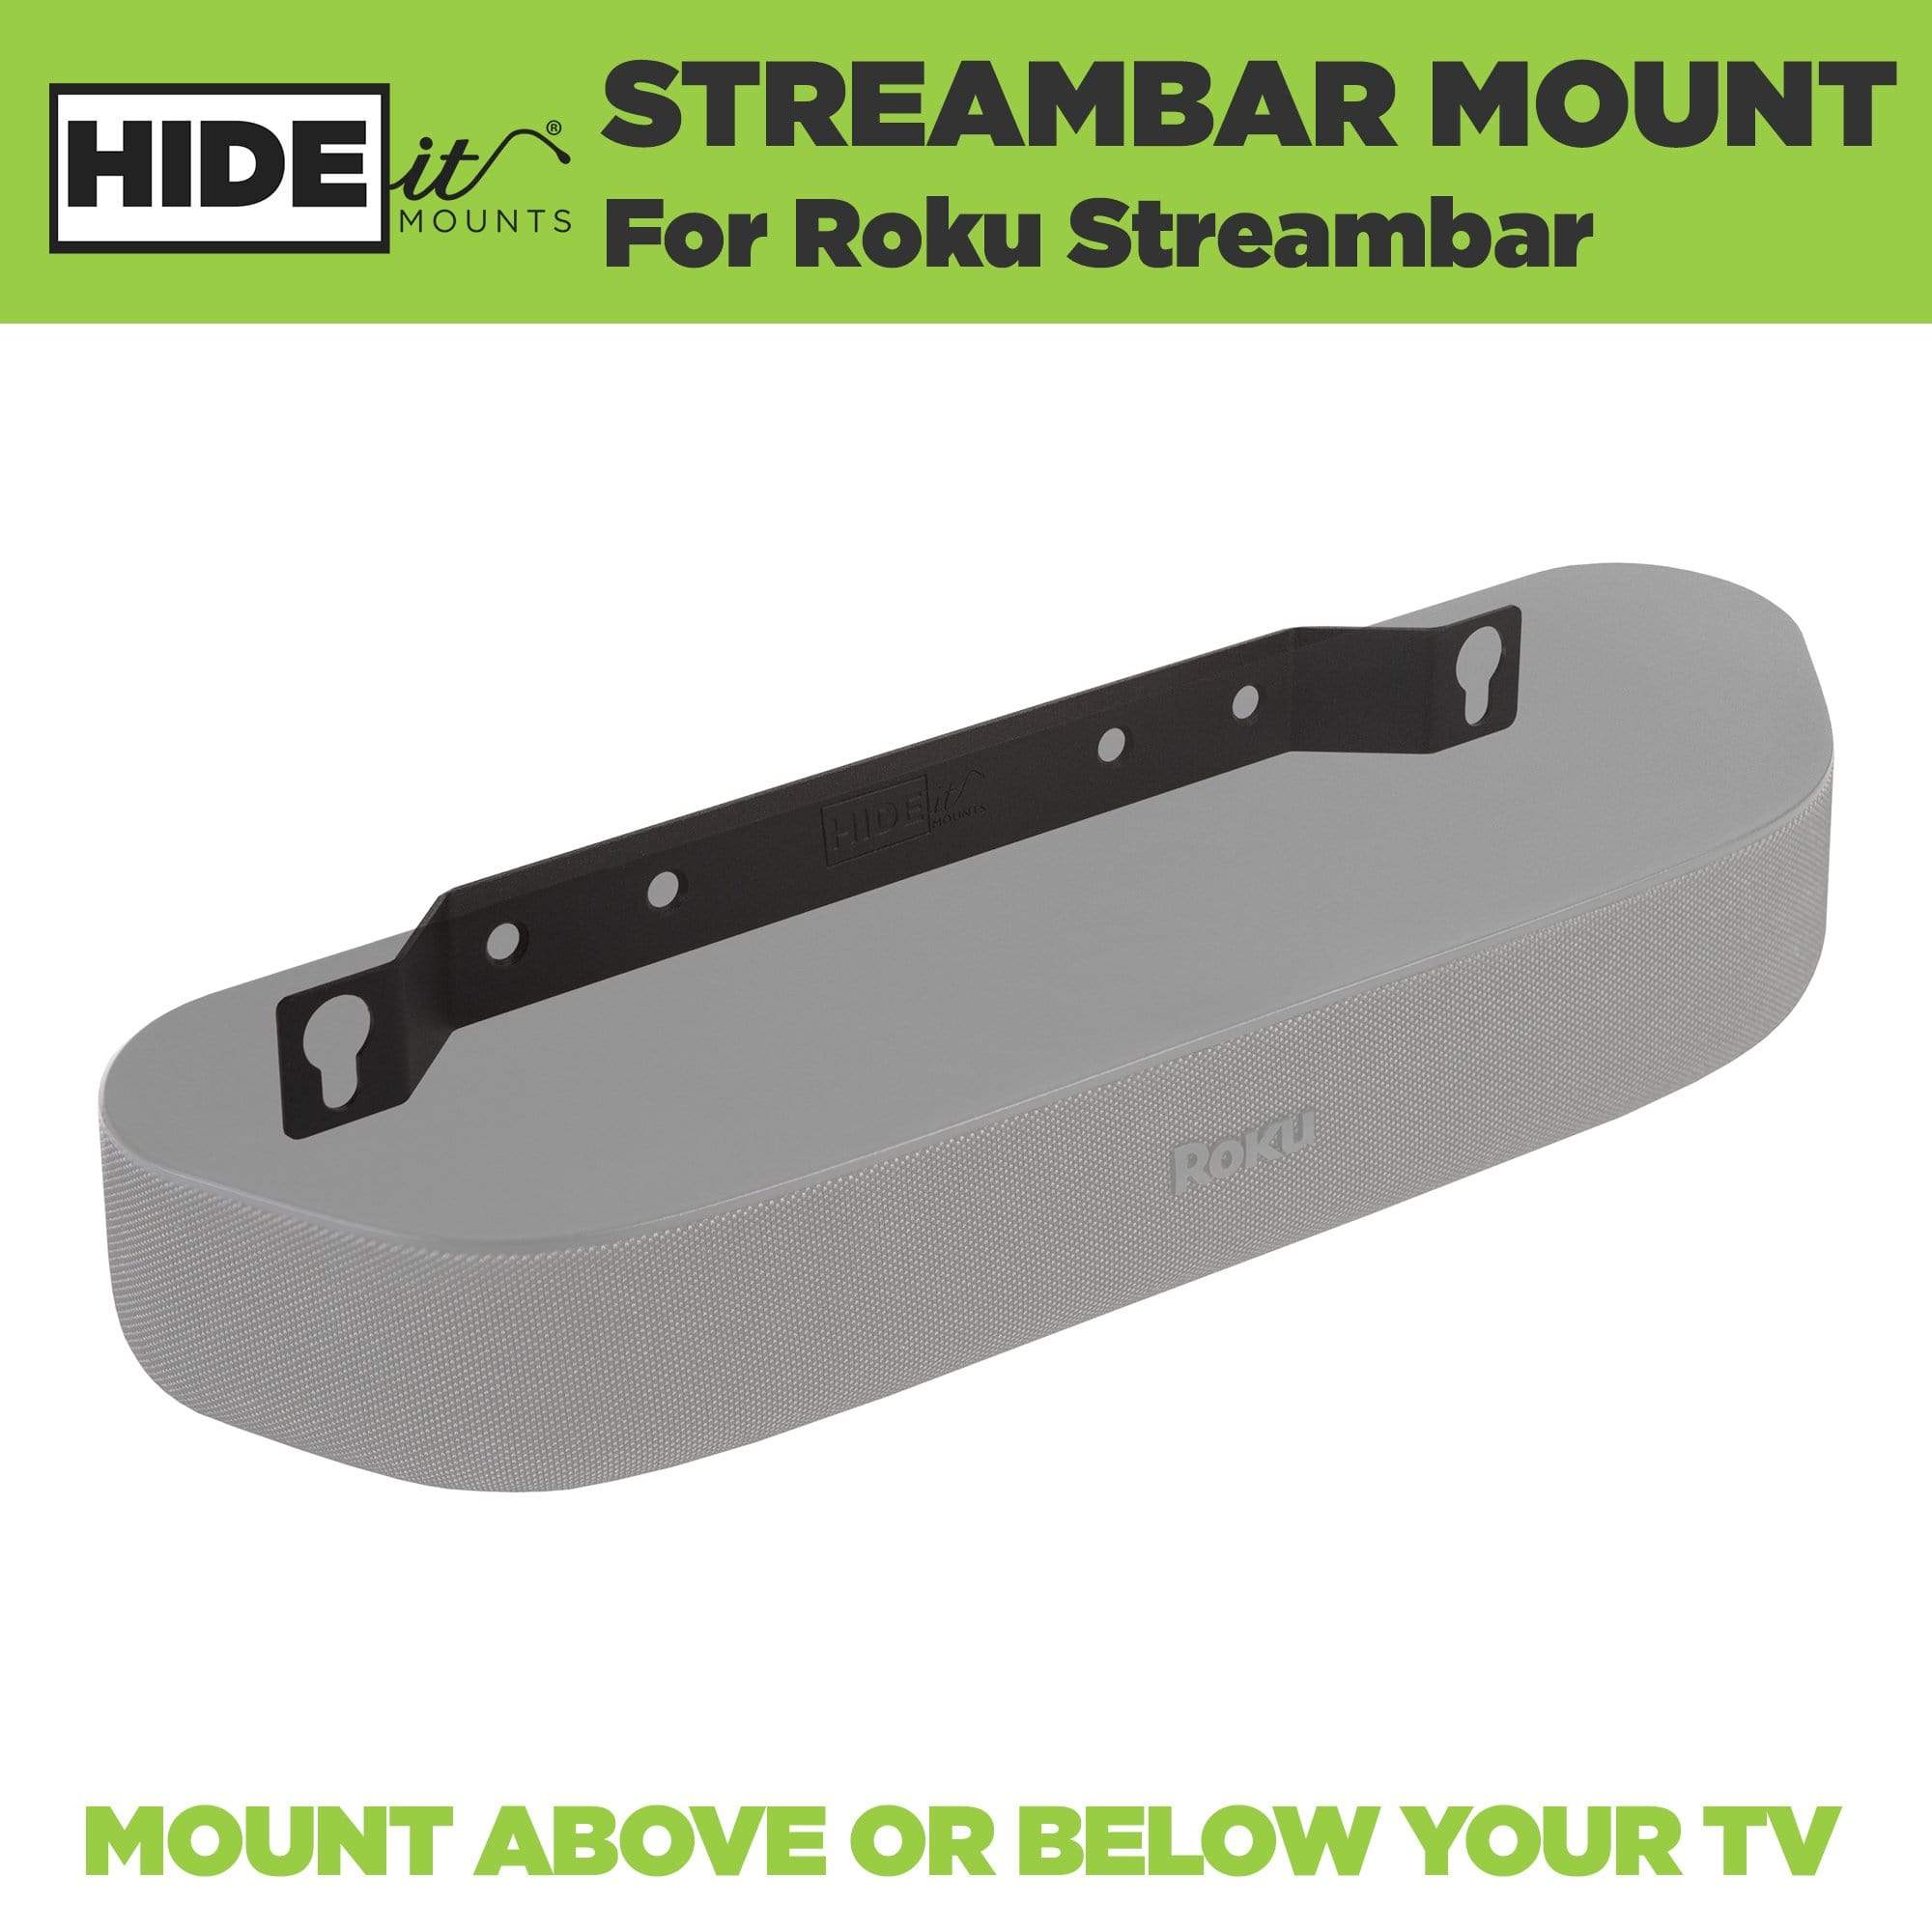 Roku Streambar shown greyed out while mounted in the HIDEit Roku Streambar Mount. Mount above or below TV.